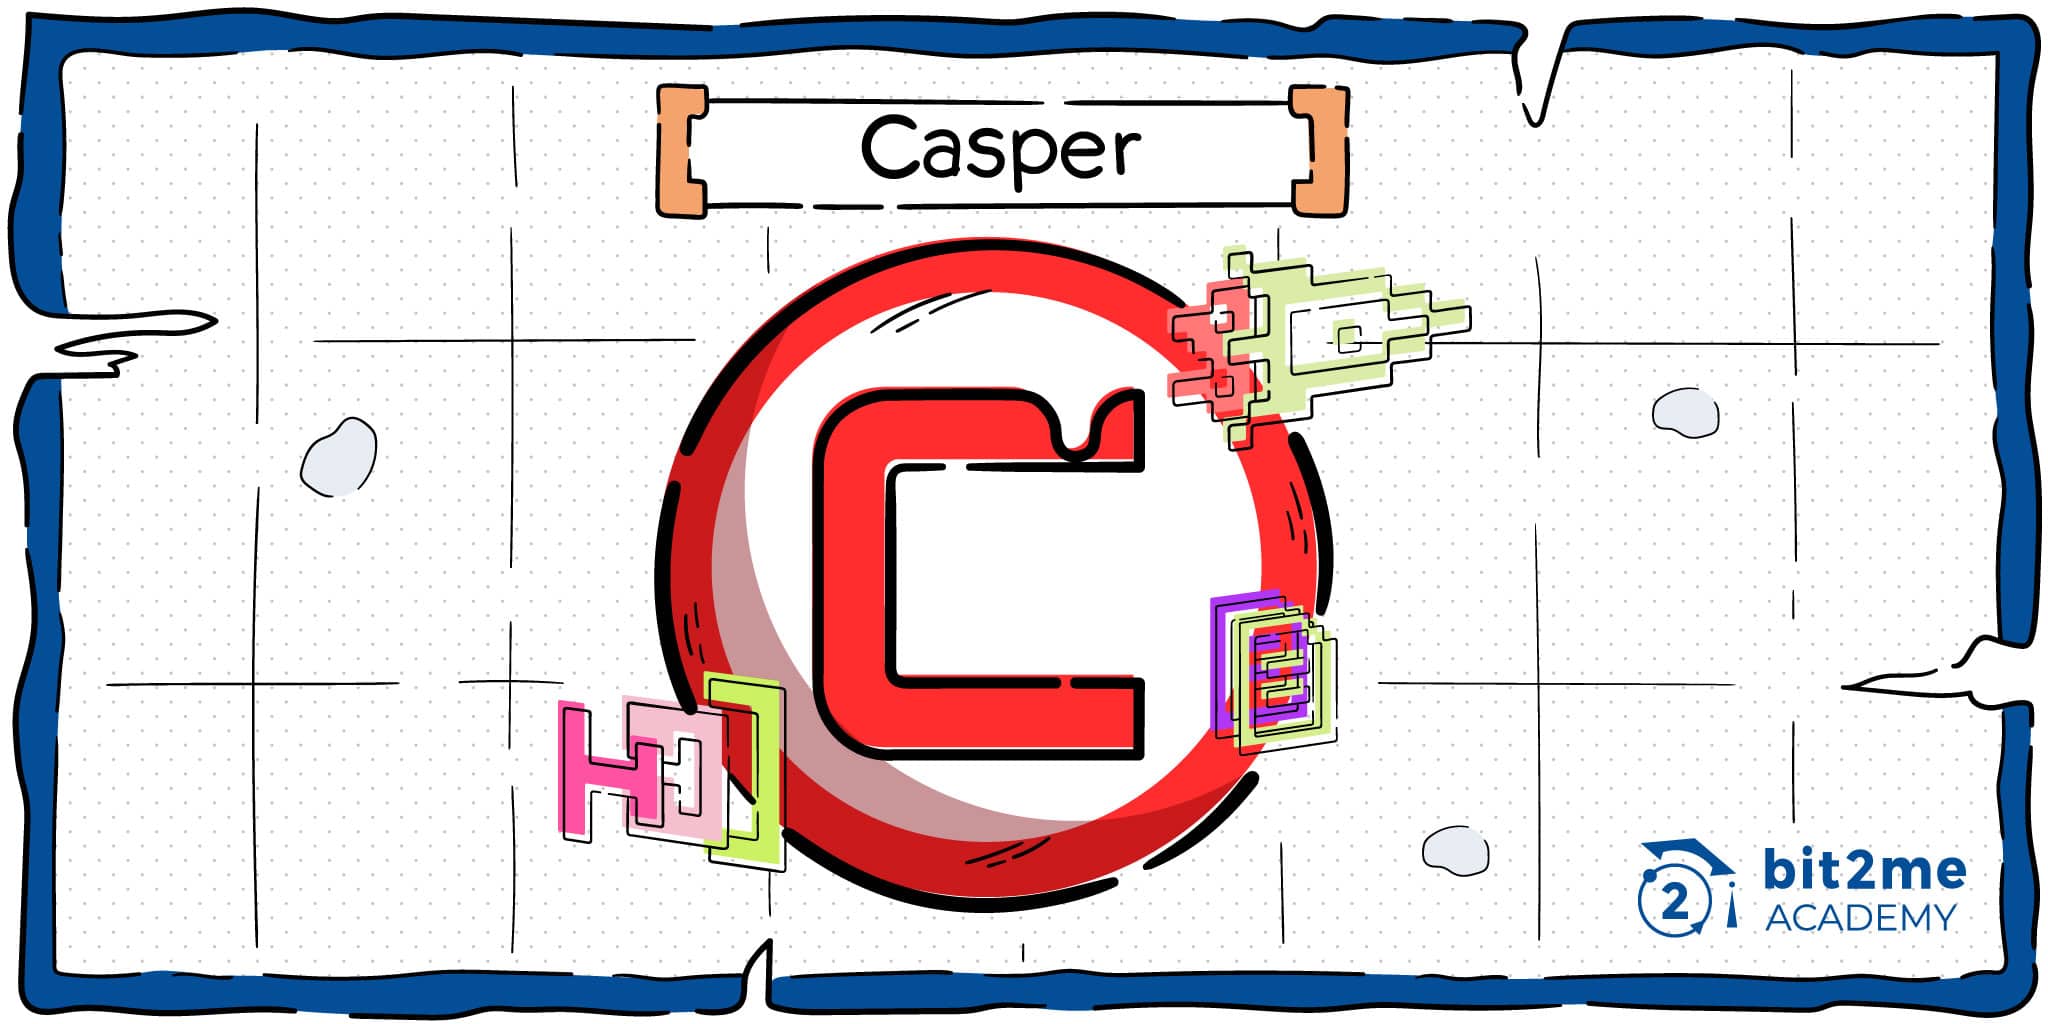 What is Casper and its cspr token?